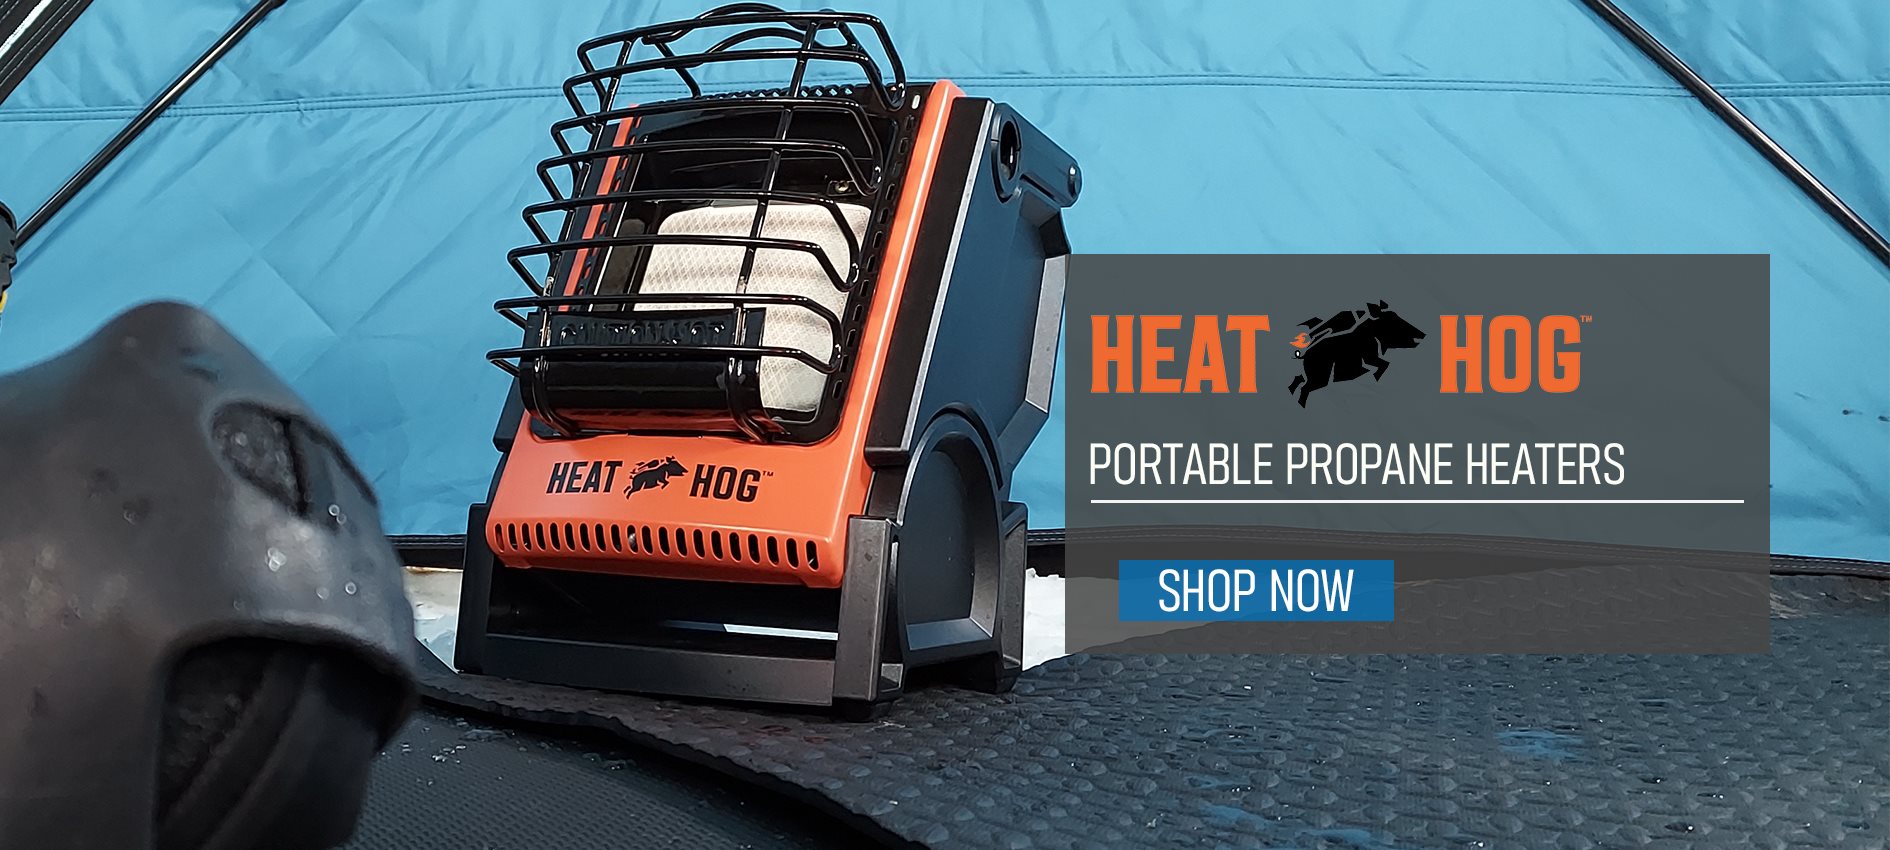 Portable Propane Heaters from Heat Hog